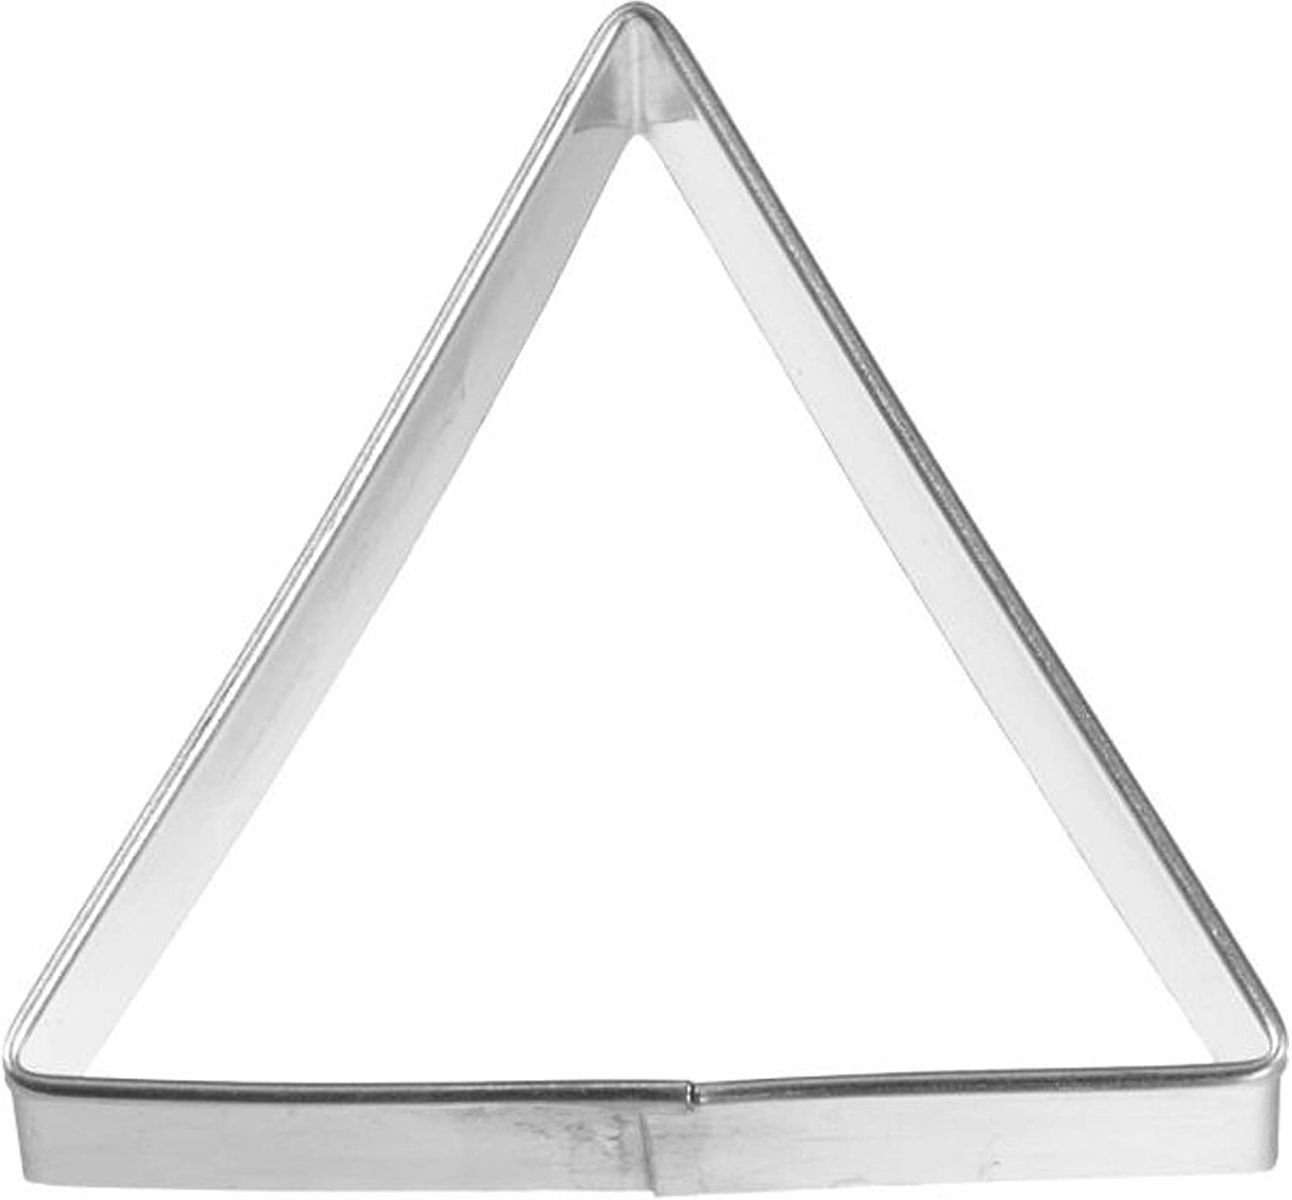 Birkmann 1010686310 Cookie cutter triangle, tinplate, 5.5 cm, plastic, gray, 5 x 3 x 2 cm